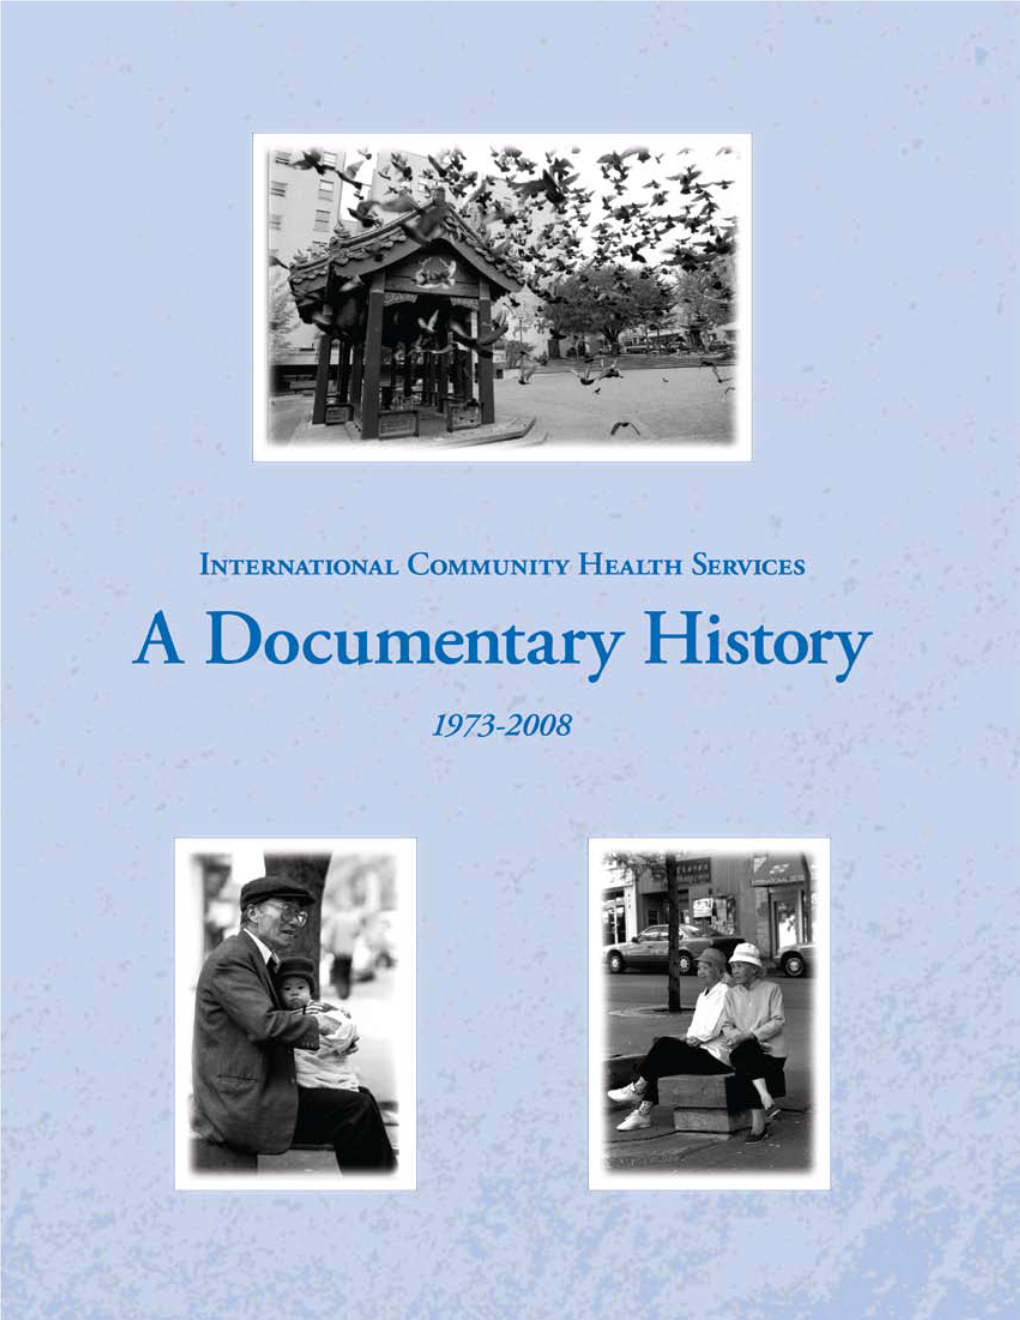 International Community Health Services: a Documentary History